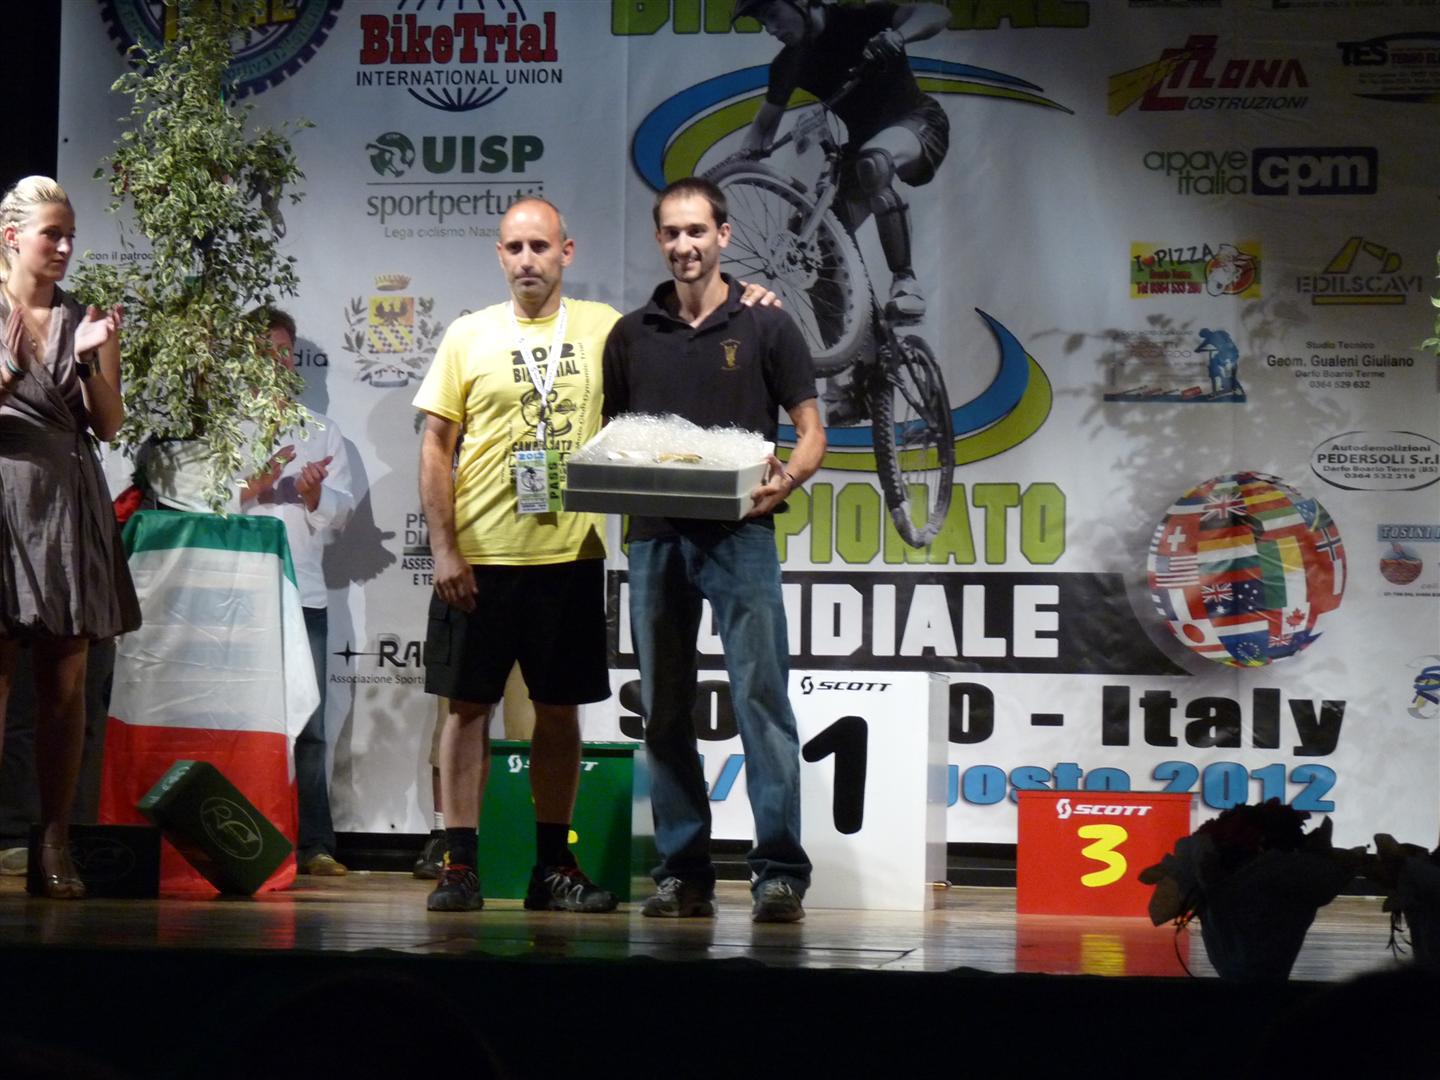 P1120542 (Large) - 2012 - WBC SONICO by Claudio Tombini